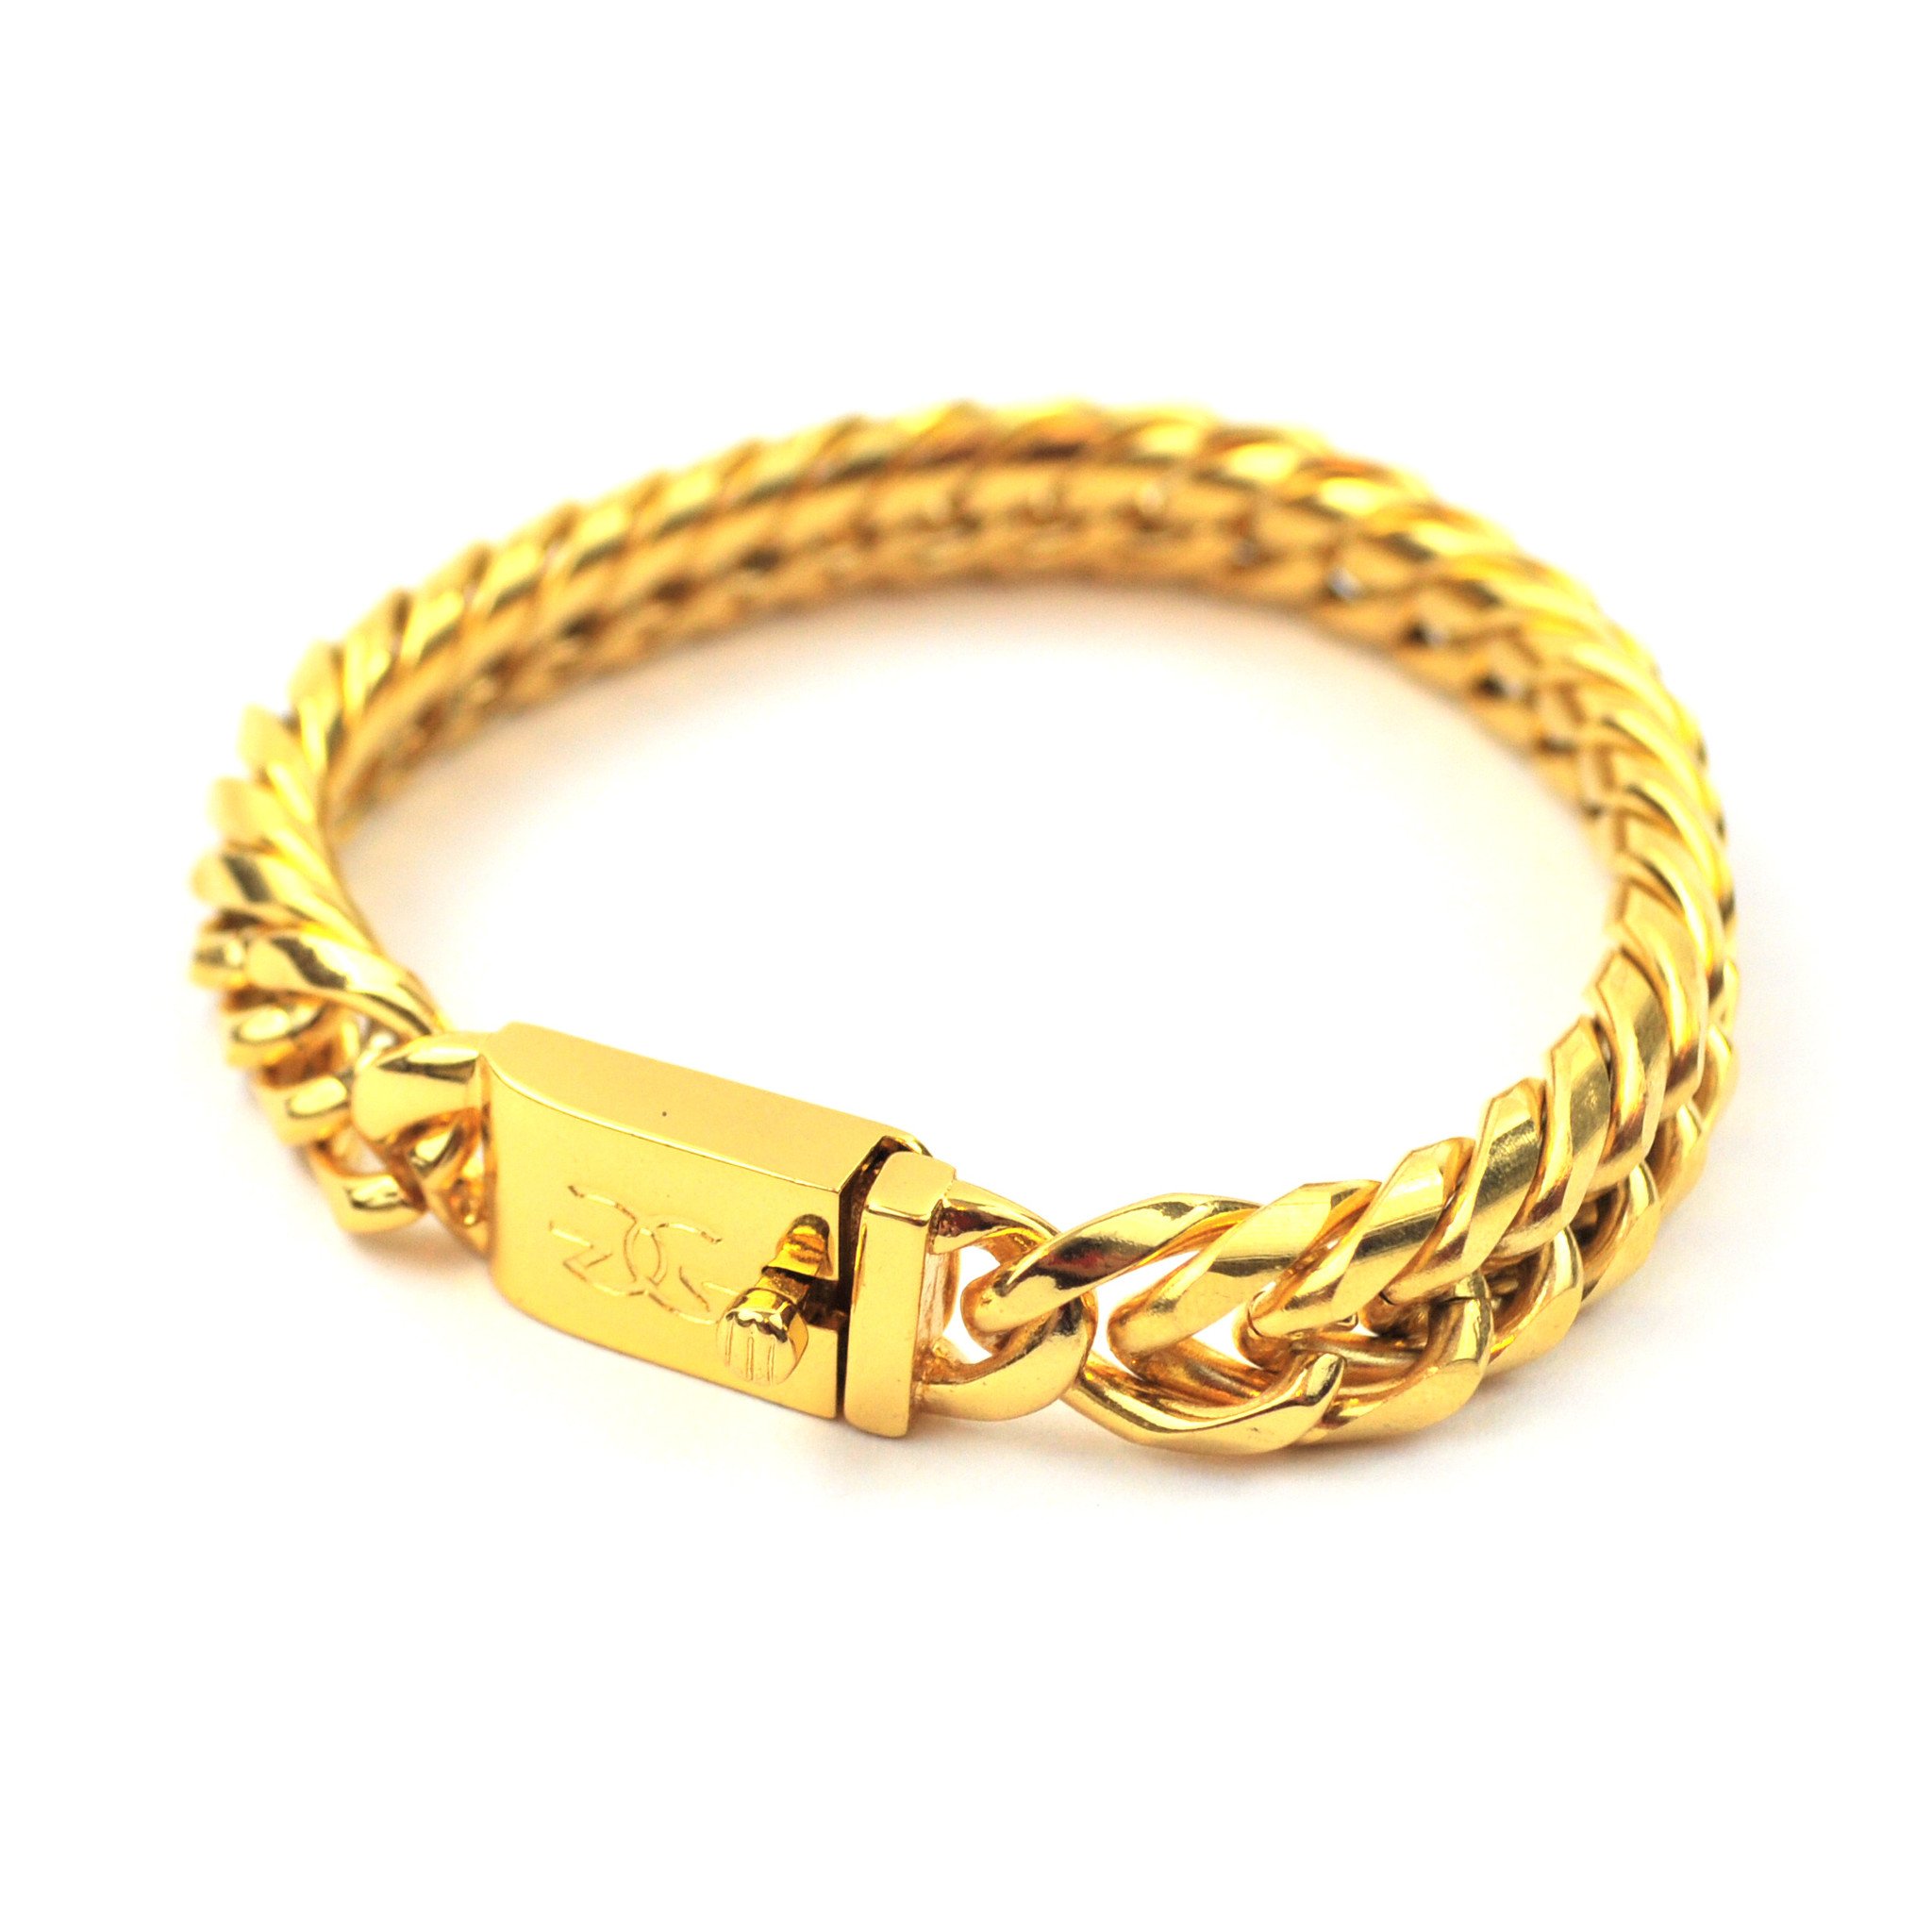 Cuban Link Bracelet - The Gold Gods Jewelry